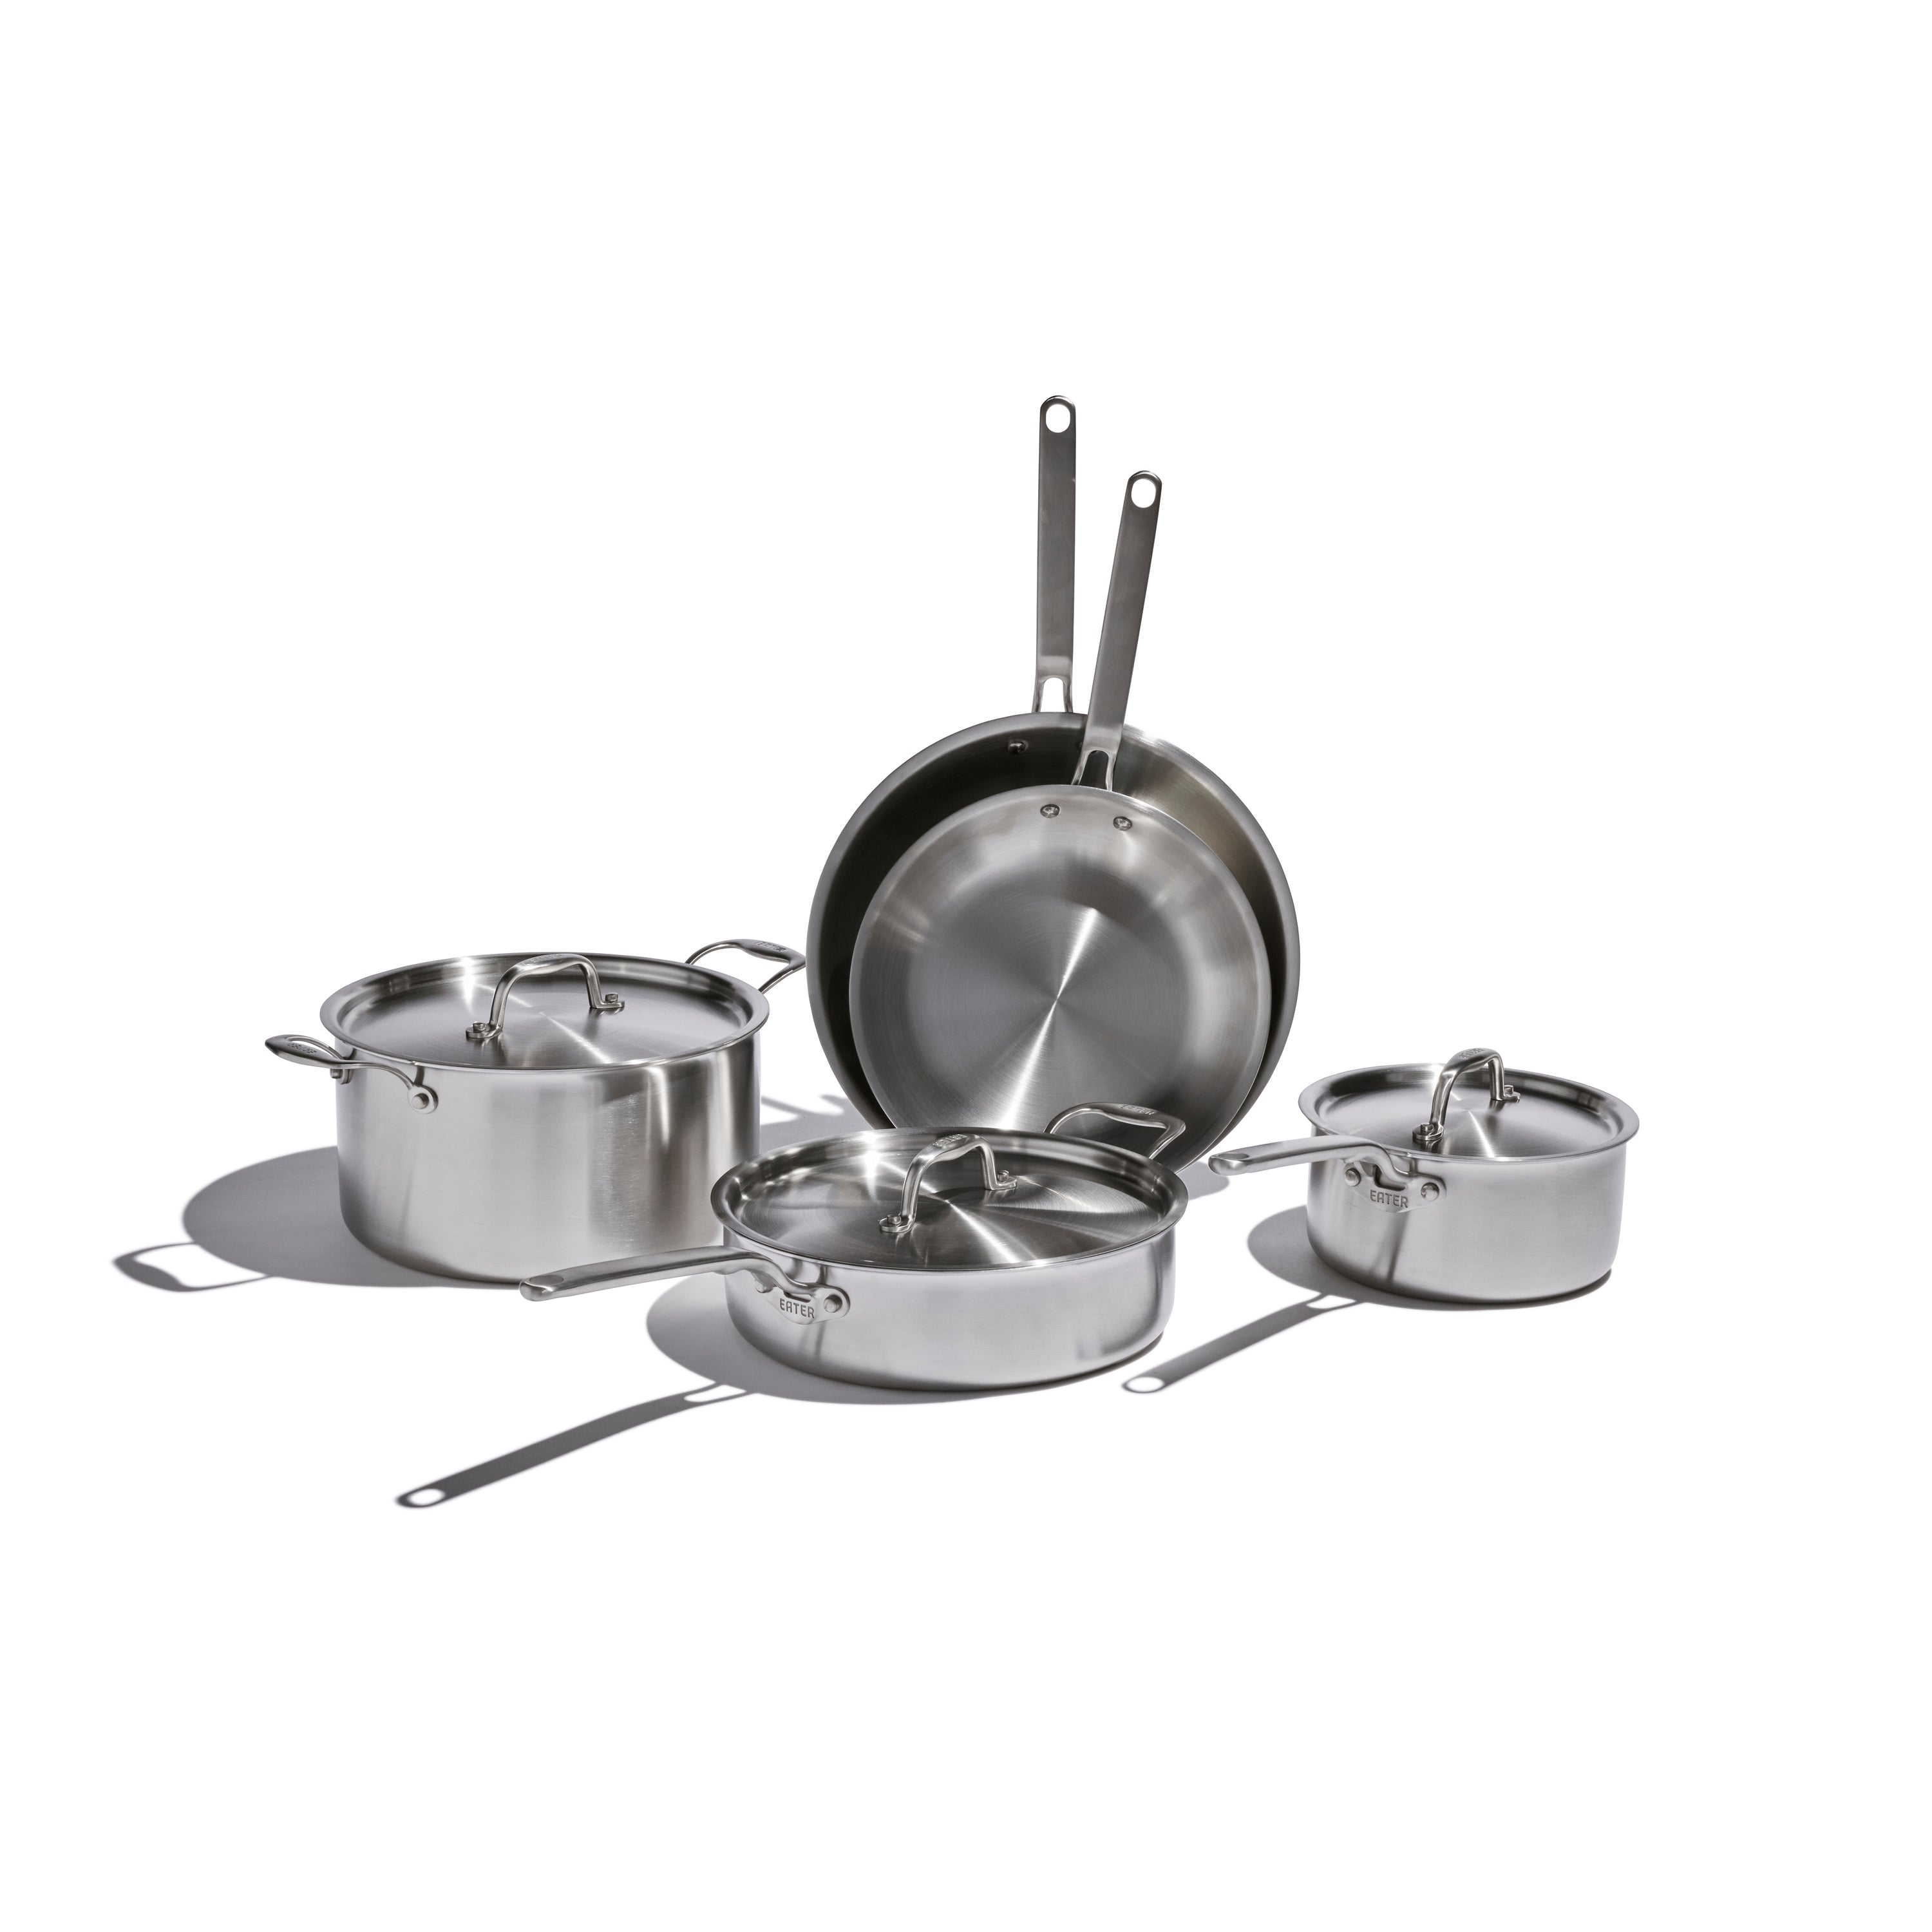 CRESTWARE 3-1/2-Quart Stainless Steel Sauce Pan, Silver (SSPAN3WC)